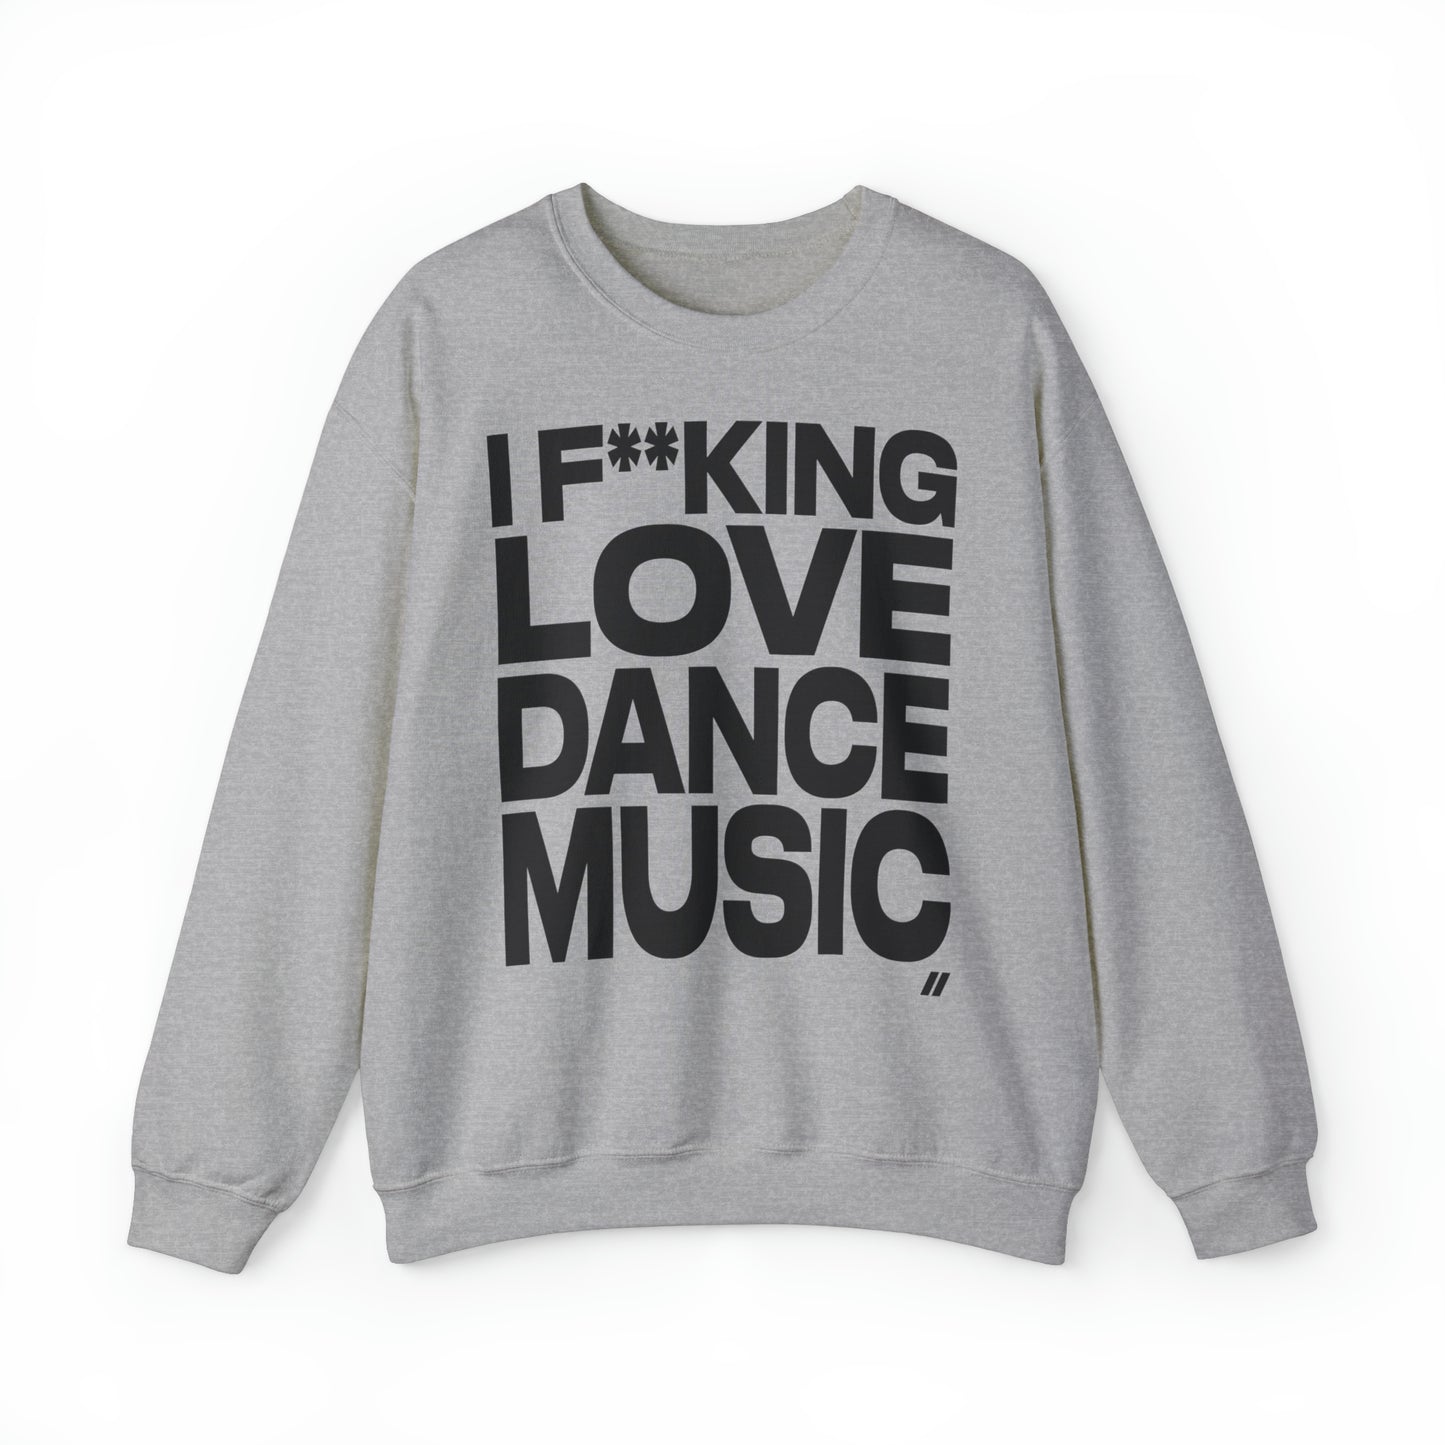 I F**king Love Dance Music - Unisex Crewneck Sweatshirt